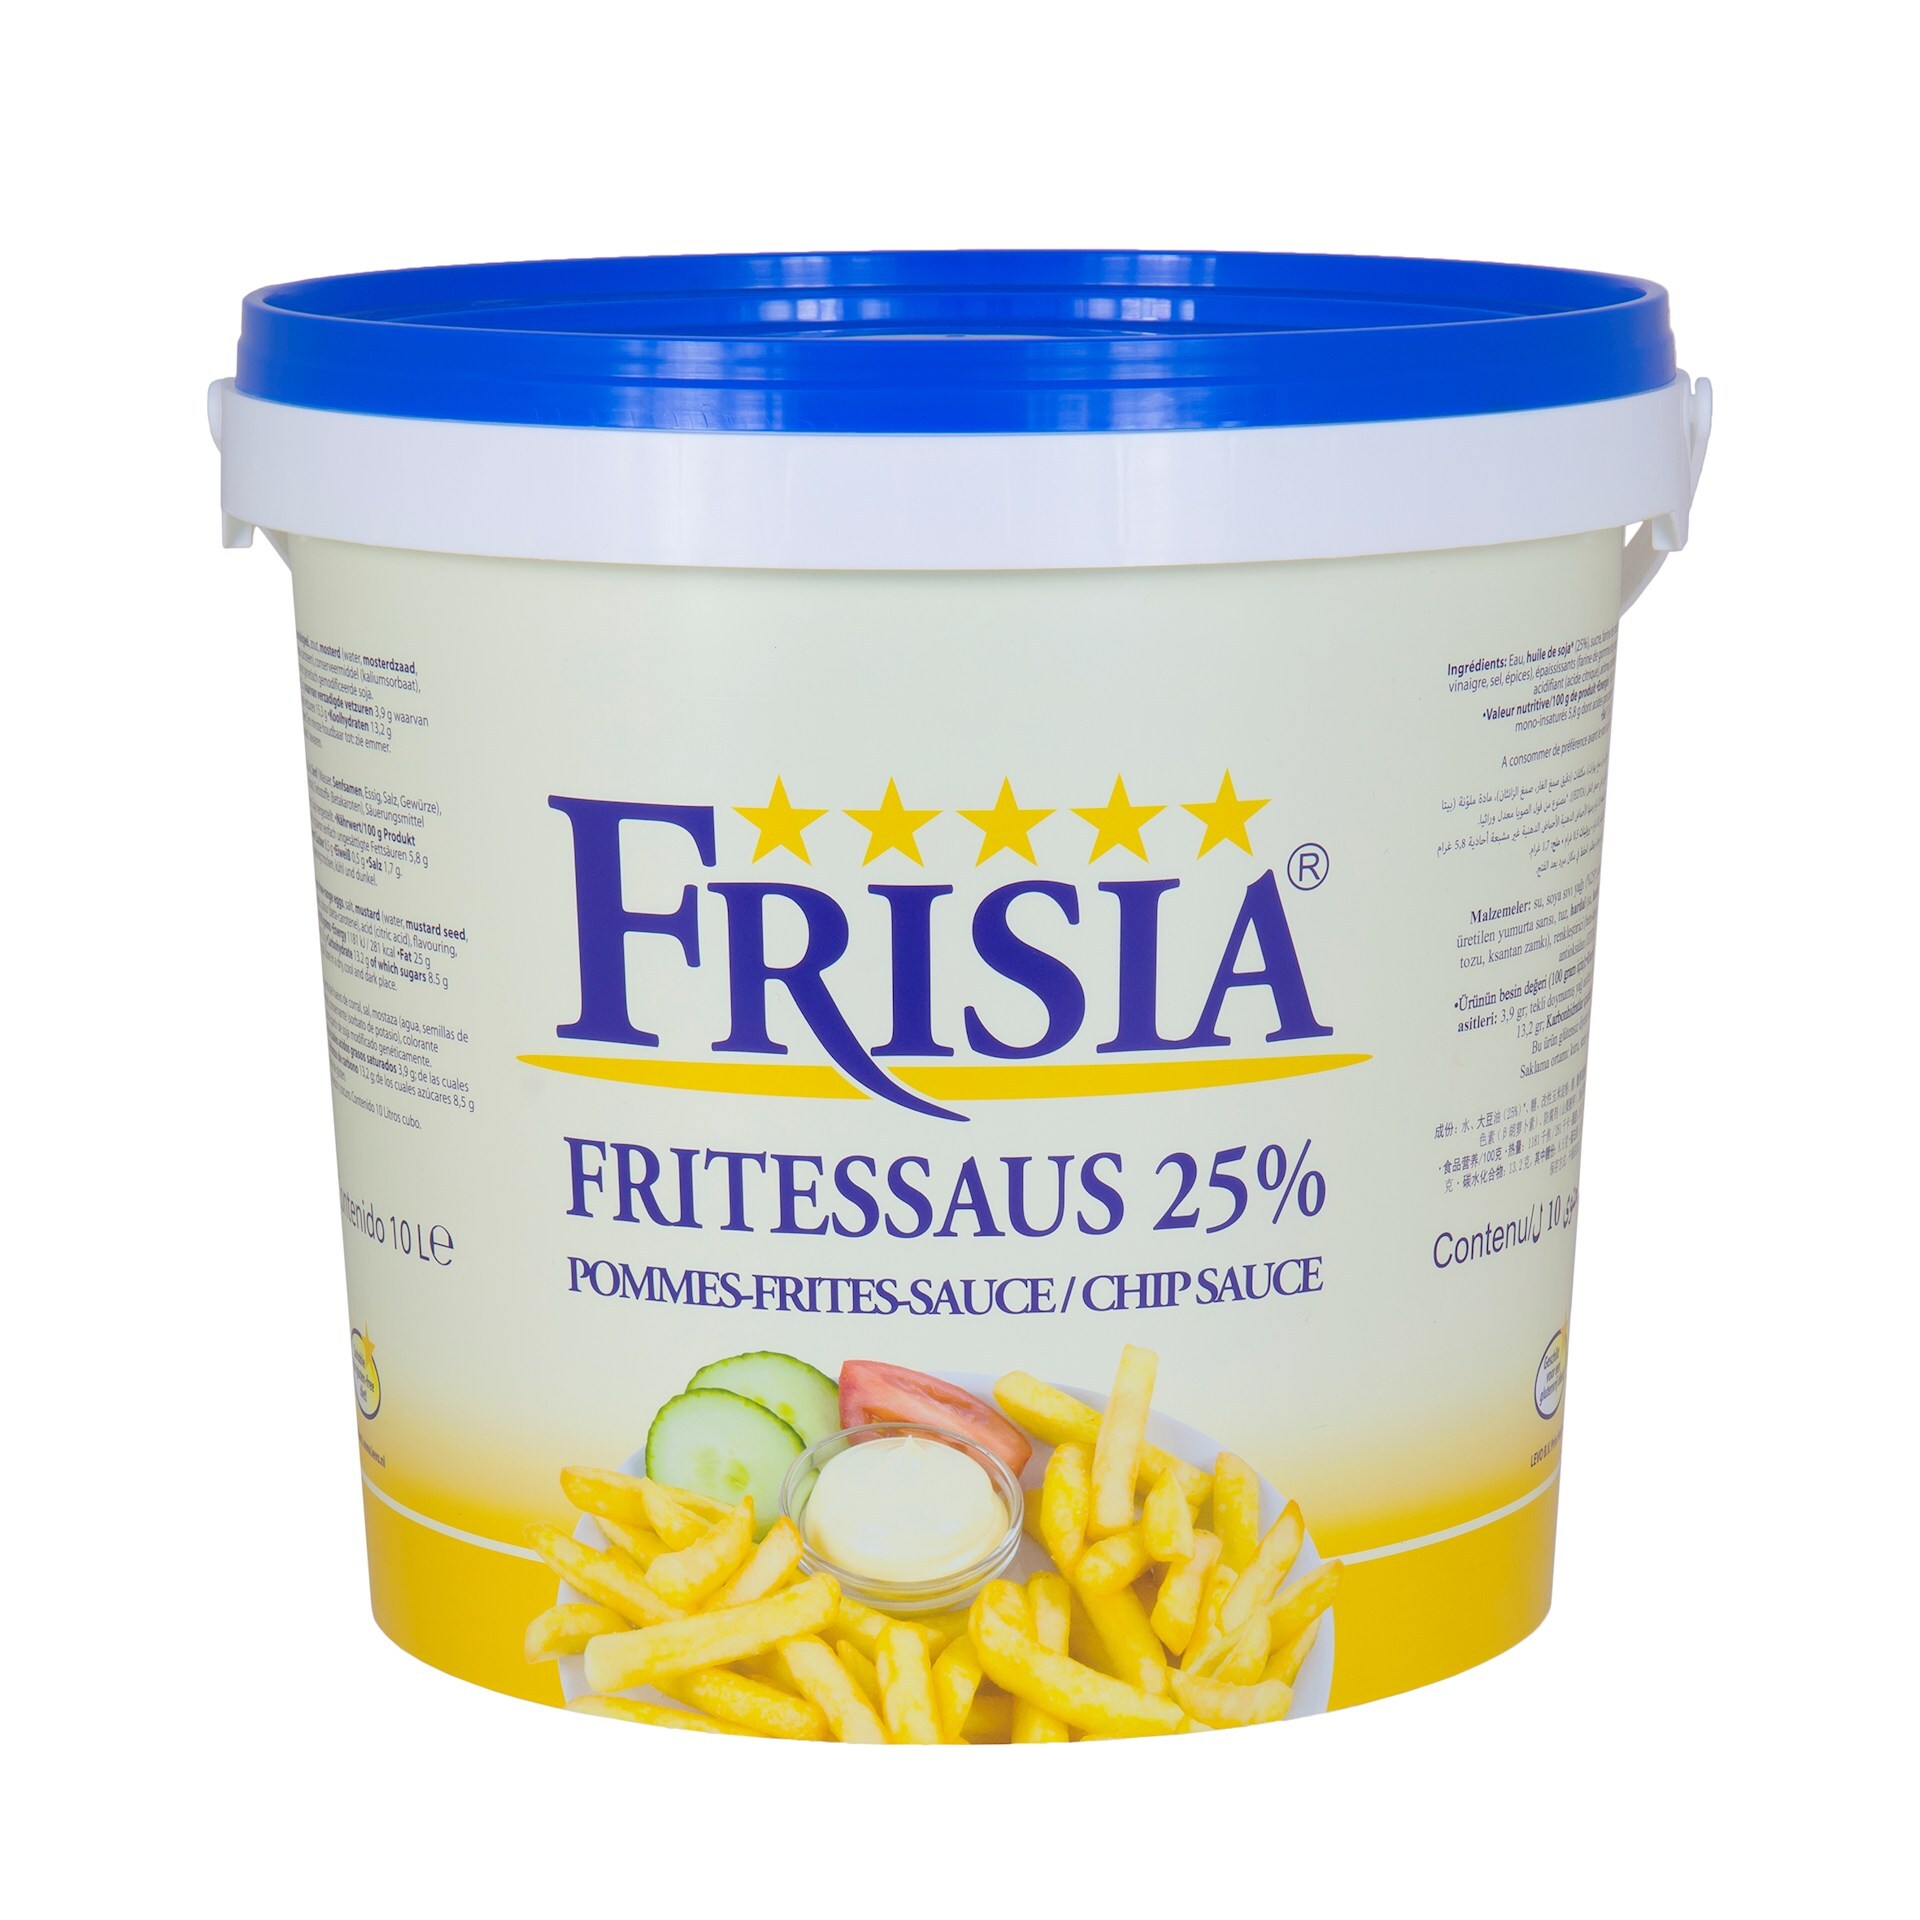 64471 Fritessaus frisia 25% 1x10 ltr